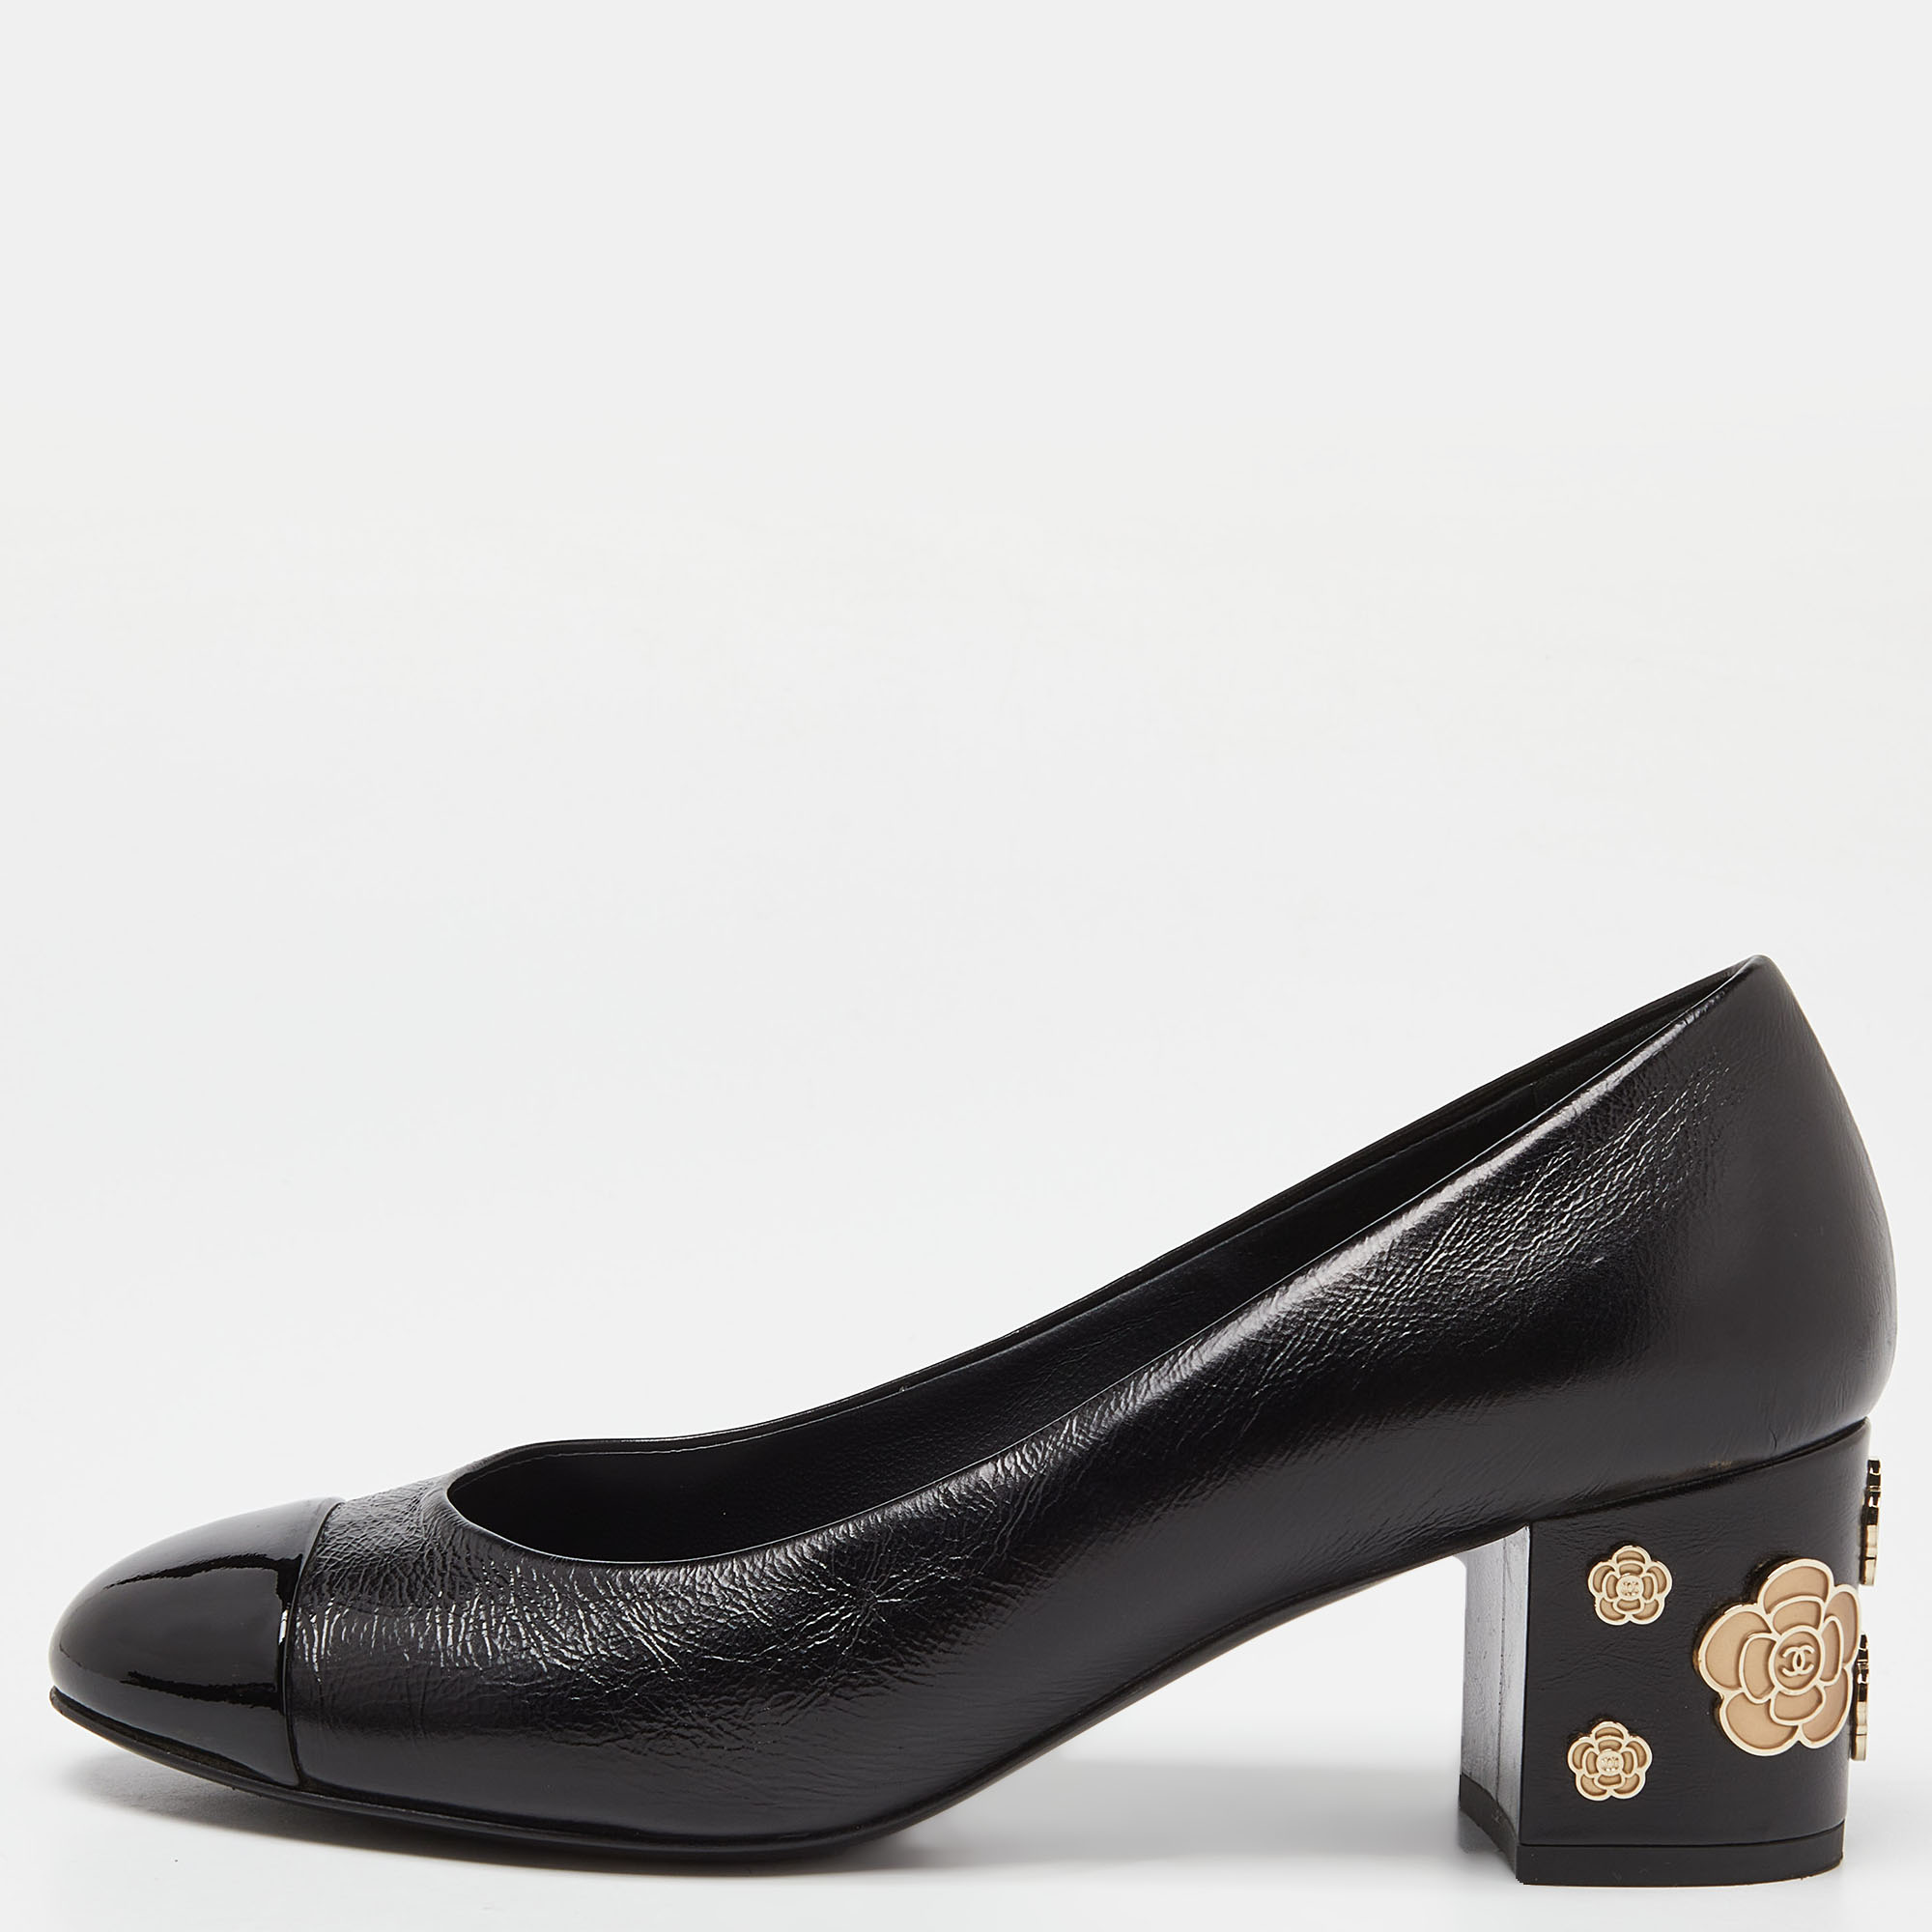 Chanel black patent and leather cc cap toe camellia applique heel pumps size 37.5